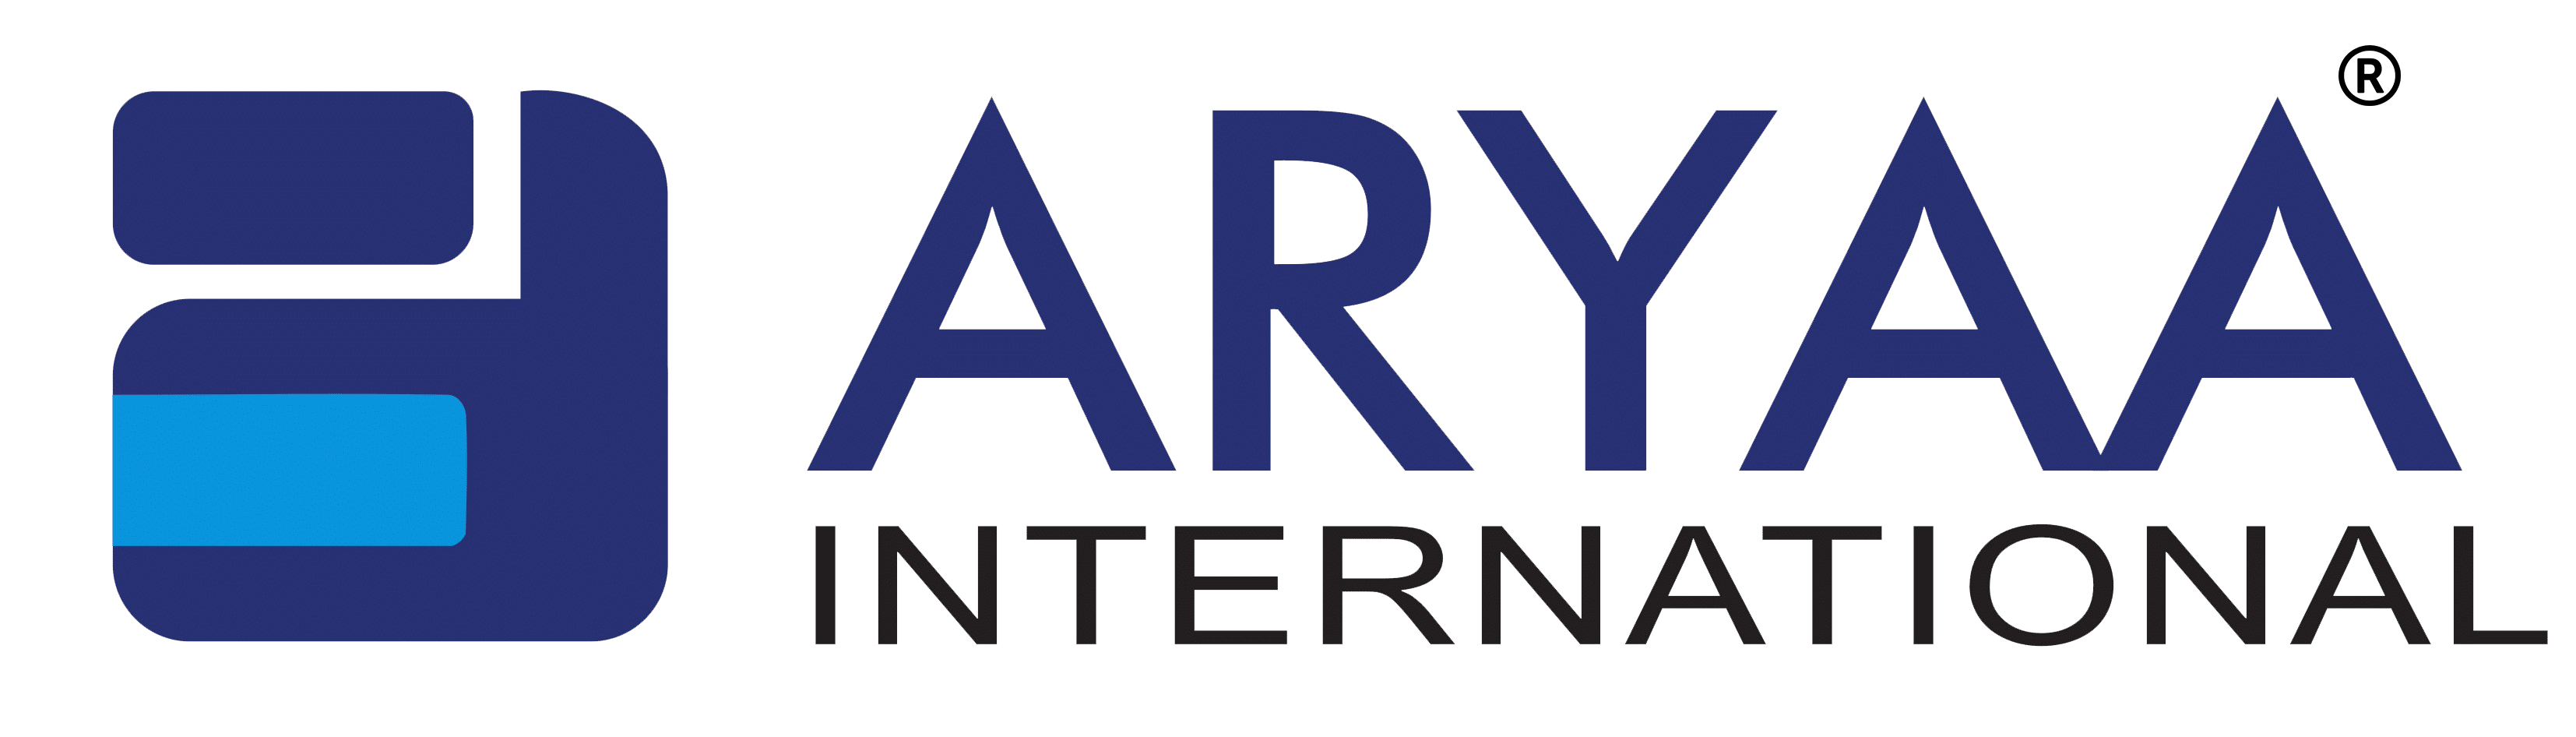 Aryaa International